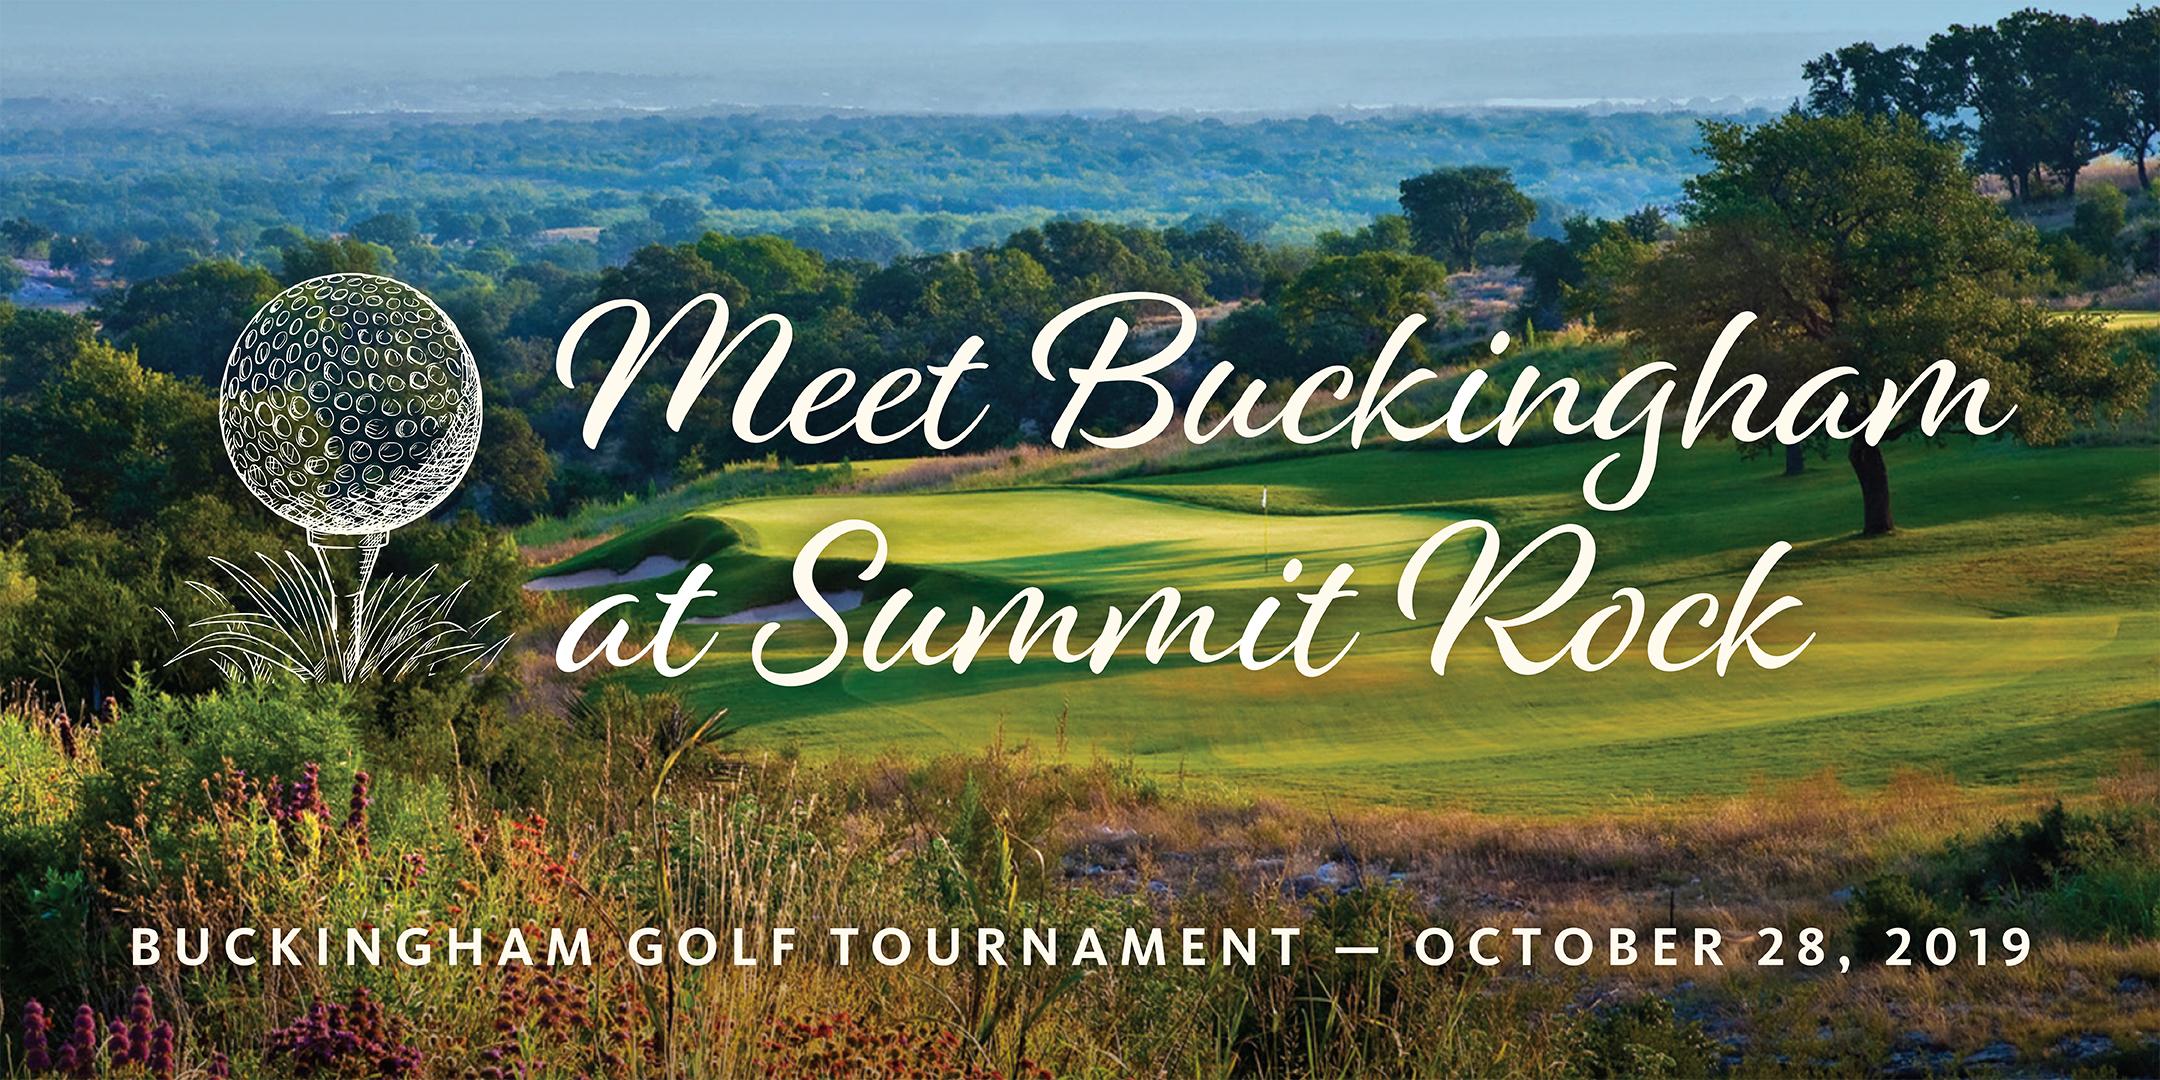 Buckingham Golf Tournament at Summit Rock - Horseshoe Bay Resort